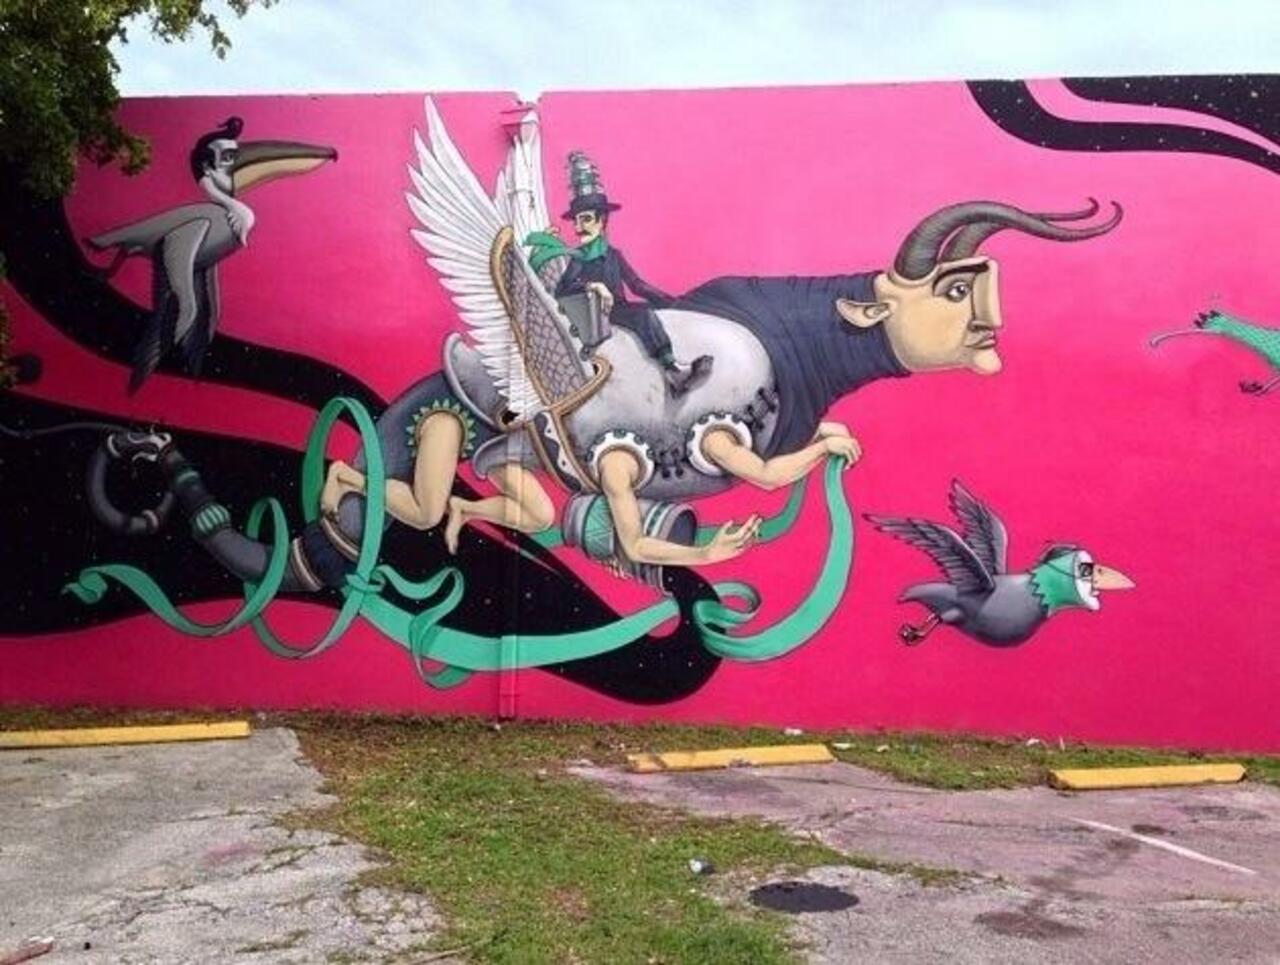 "@Pitchuskita: Kislow 
Miami Art Basel 2013

#streetart #art #graffiti http://t.co/EtX1sFWYk7"